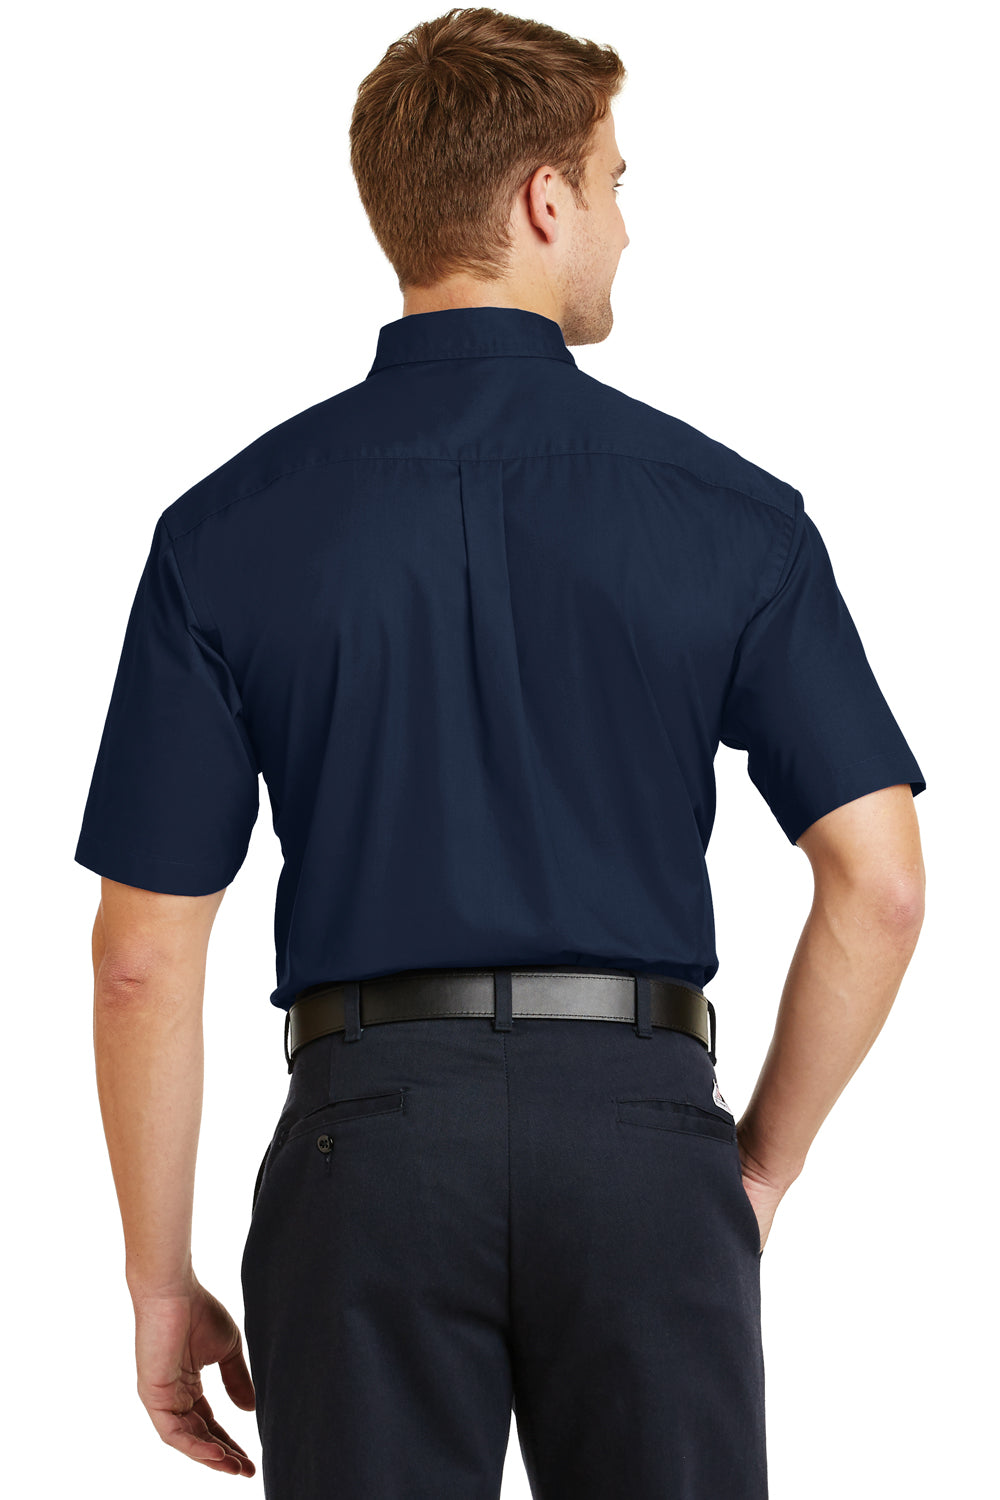 CornerStone SP18 Mens SuperPro Stain Resistant Short Sleeve Button Down Shirt w/ Pocket Navy Blue Back